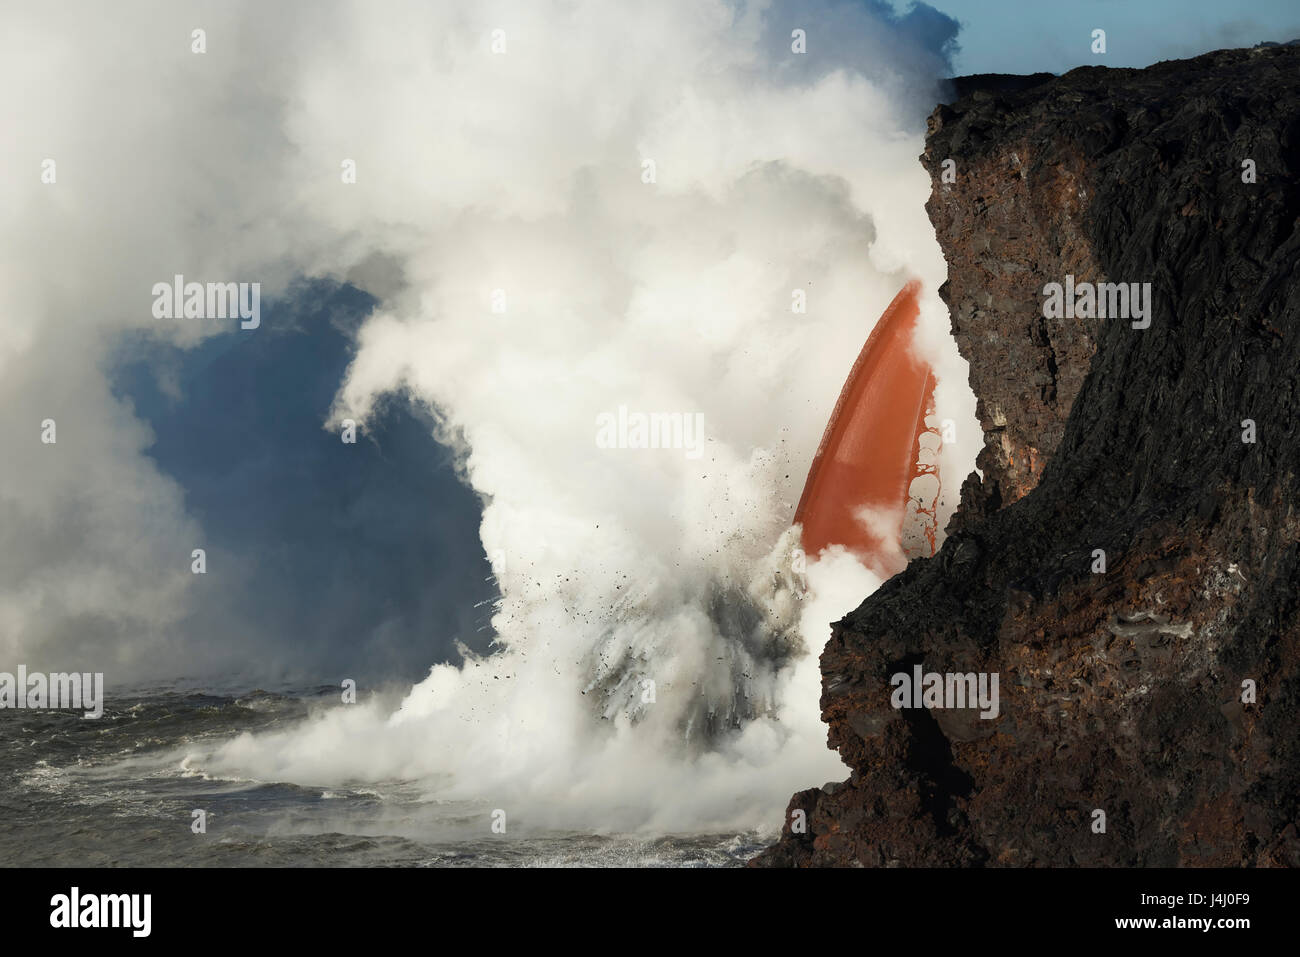 hot lava from from Kilauea Volcano creates a steam cloud where it enters the ocean at Kamokuna in Hawaii Volcanoes National Park, Hawaii Island, USA Stock Photo